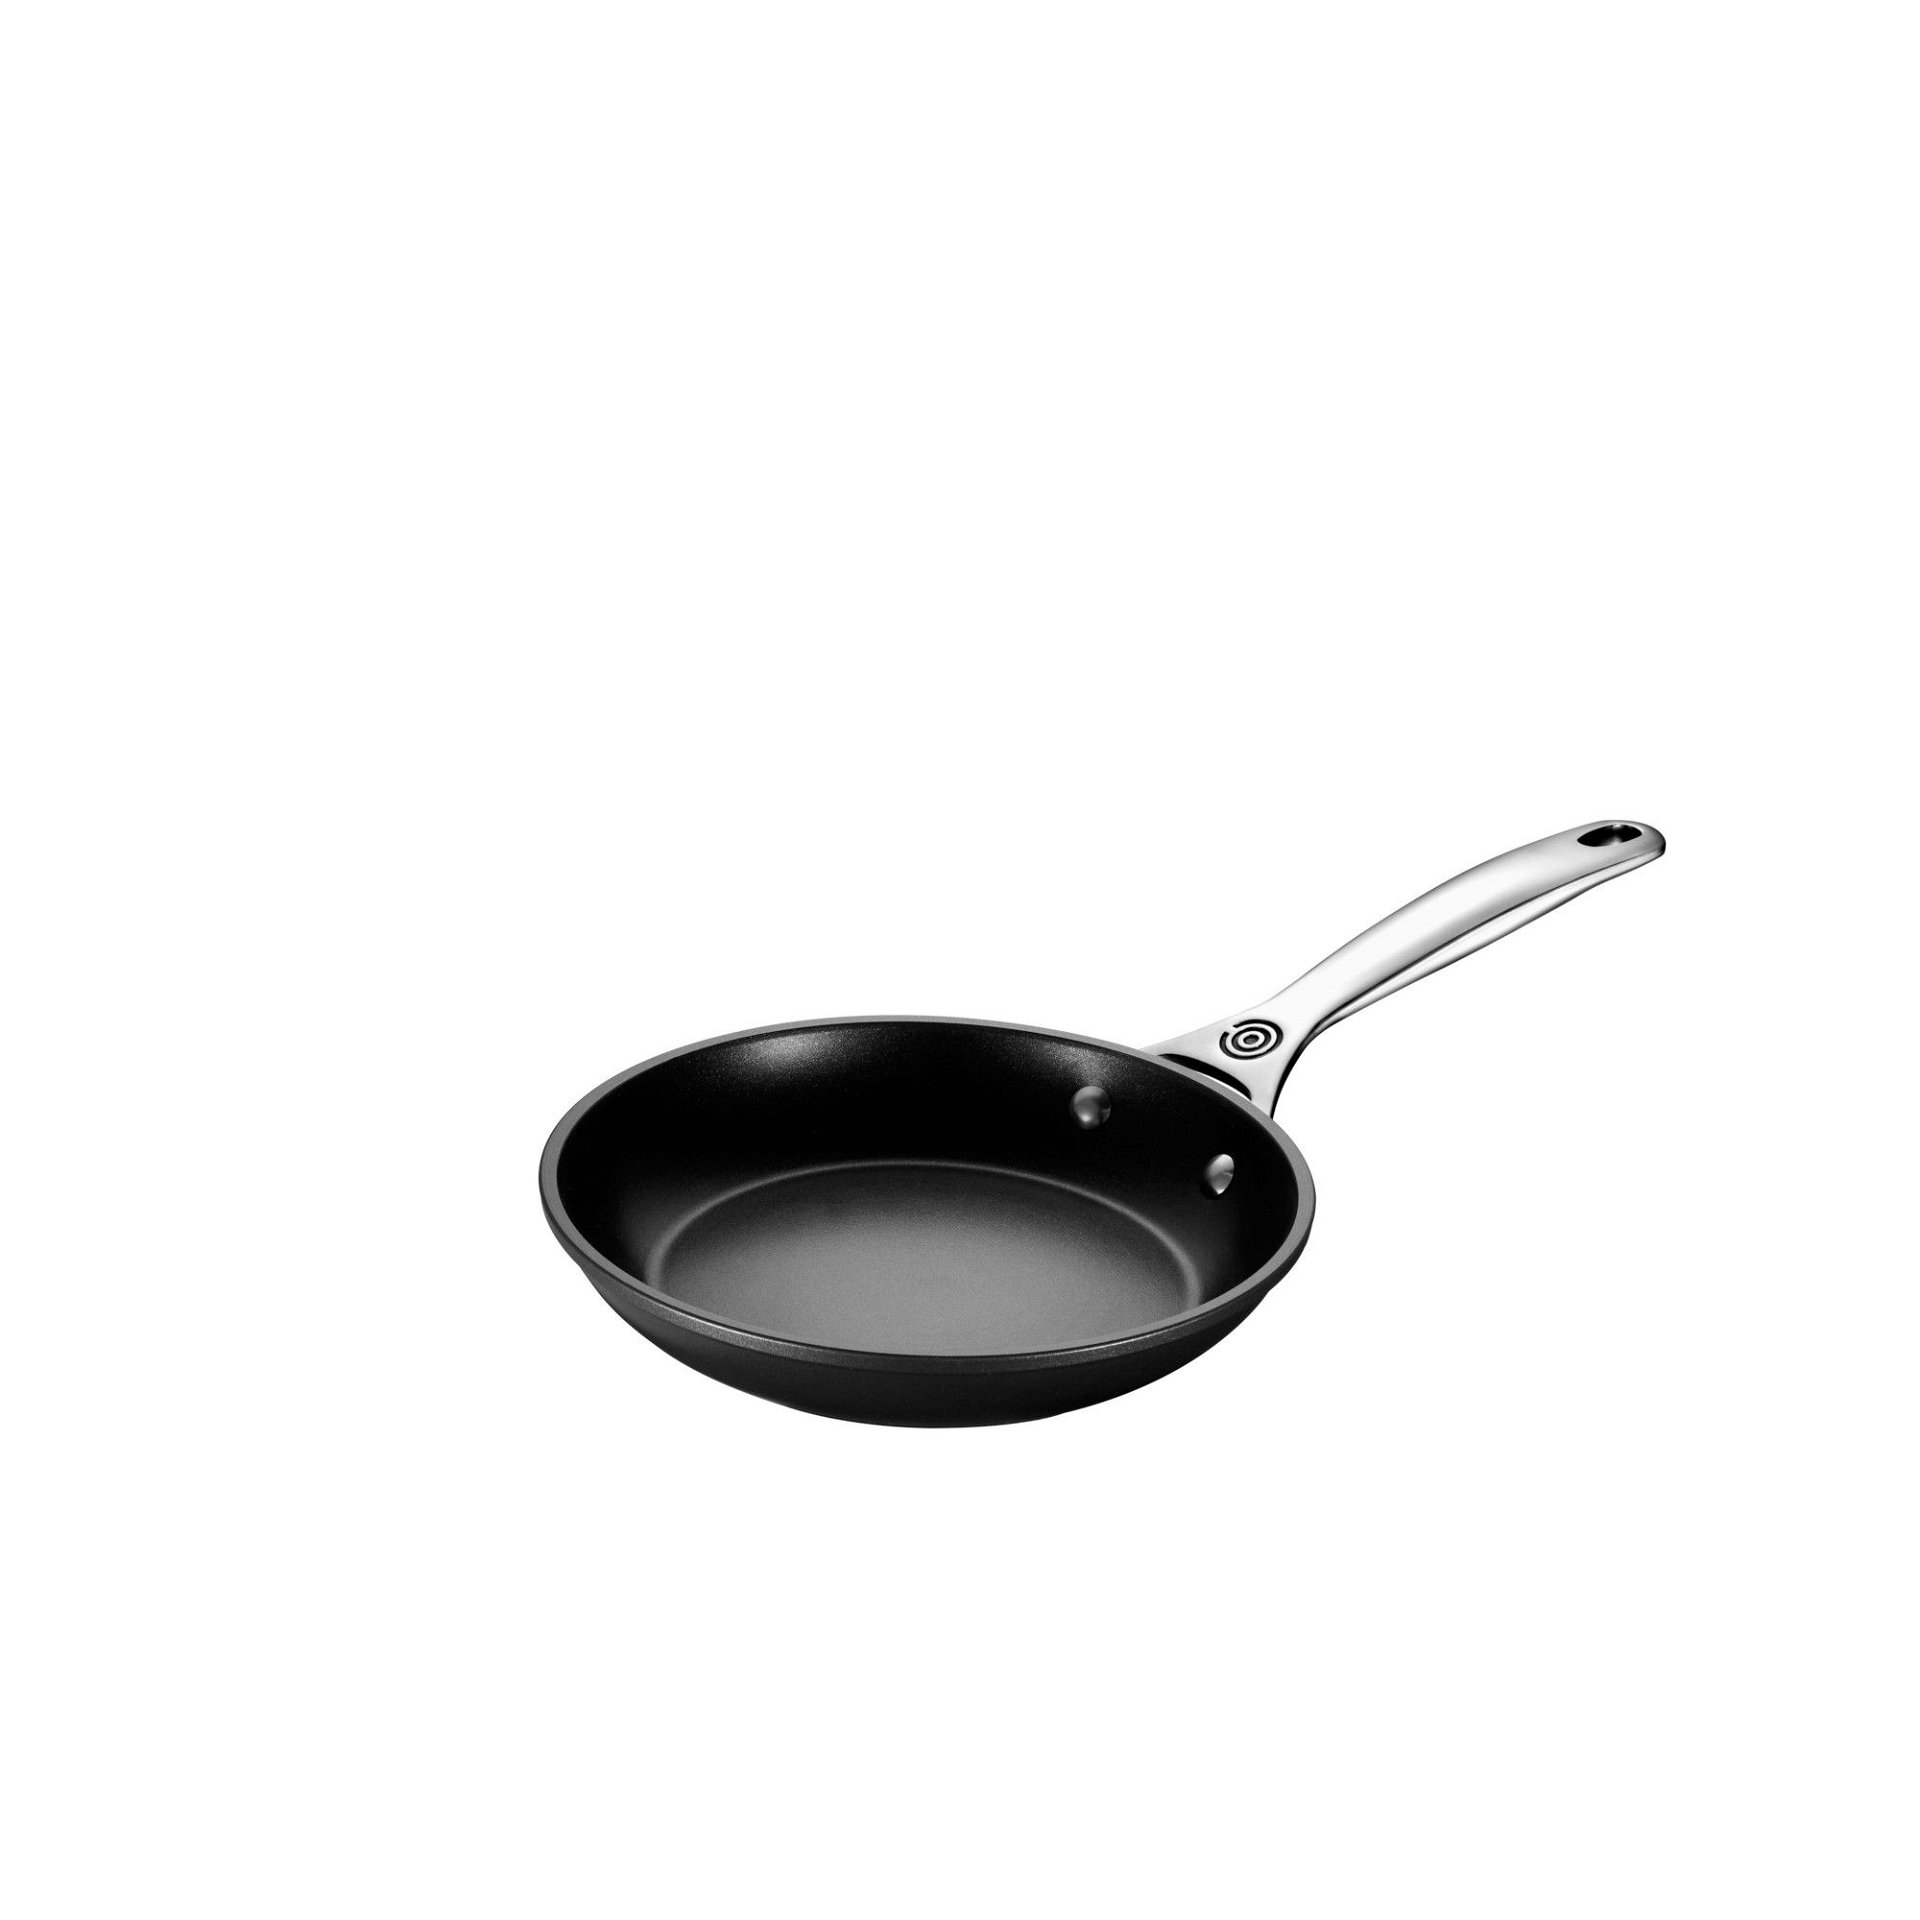 Le Creuset Non-Stick Chef's Pan with Pouring Spouts